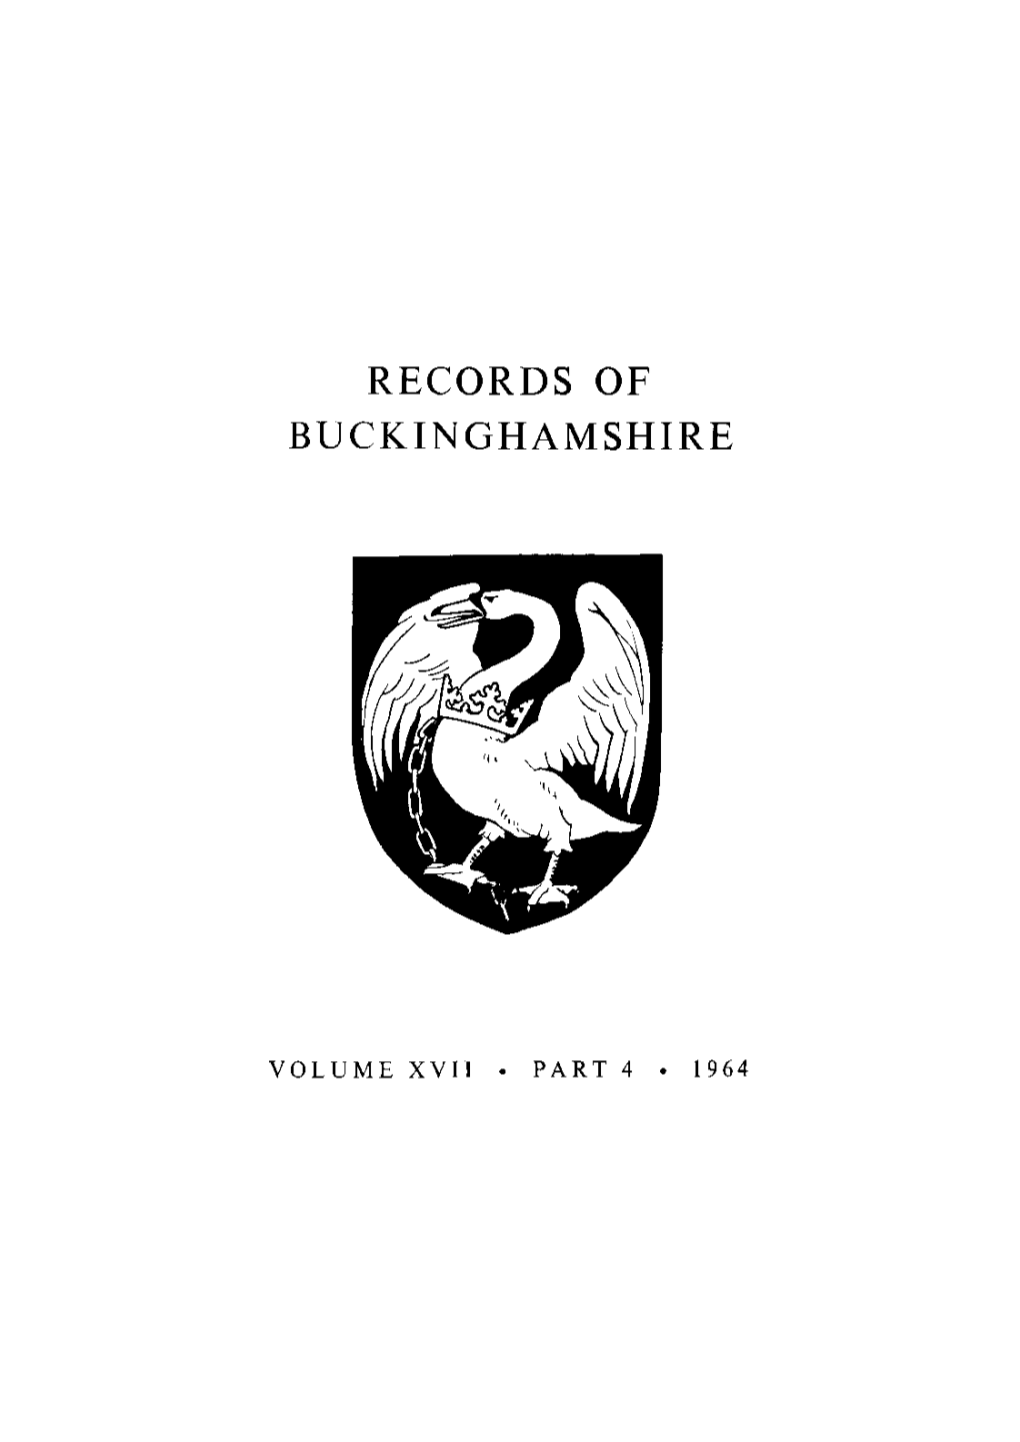 Records of Buckinghamshire